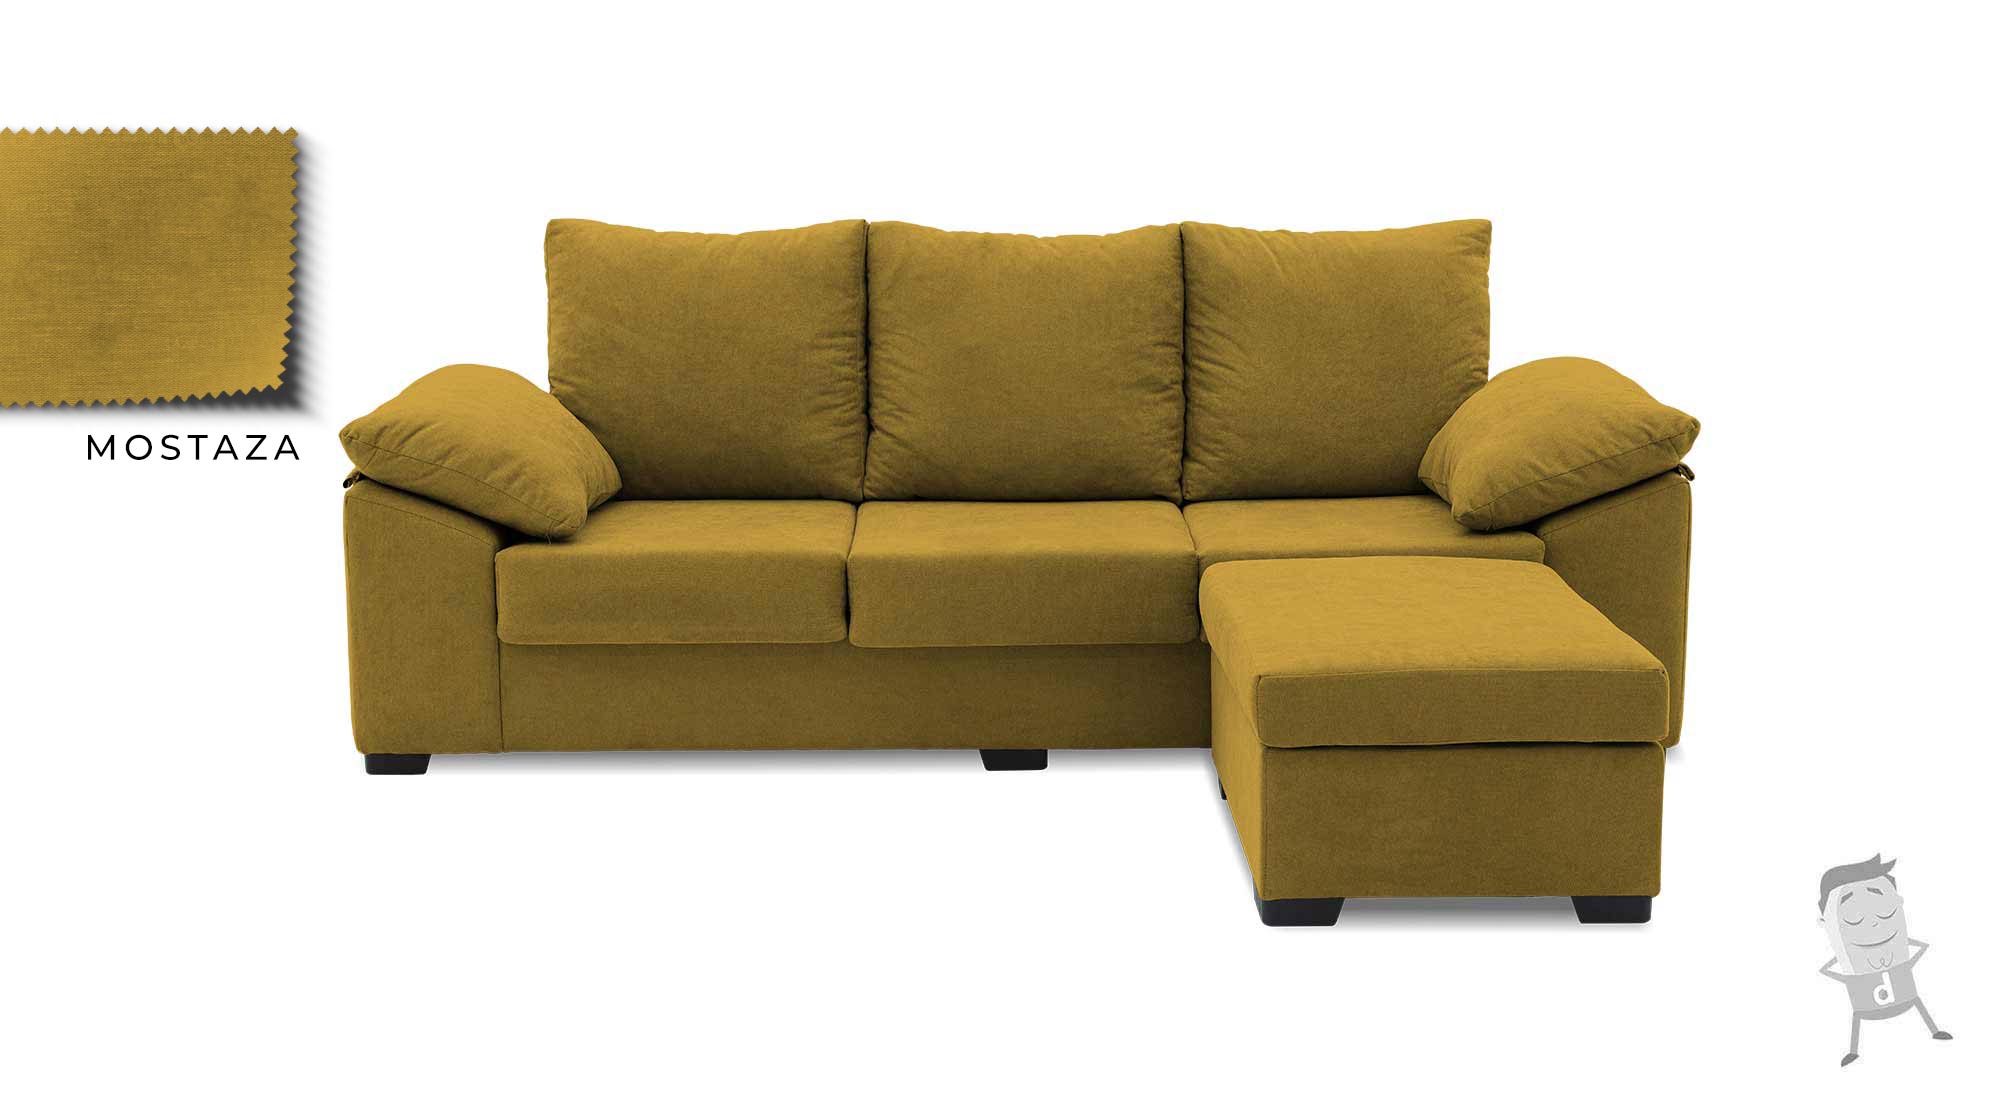 sofa-chaise-longue-ceo-mostaza